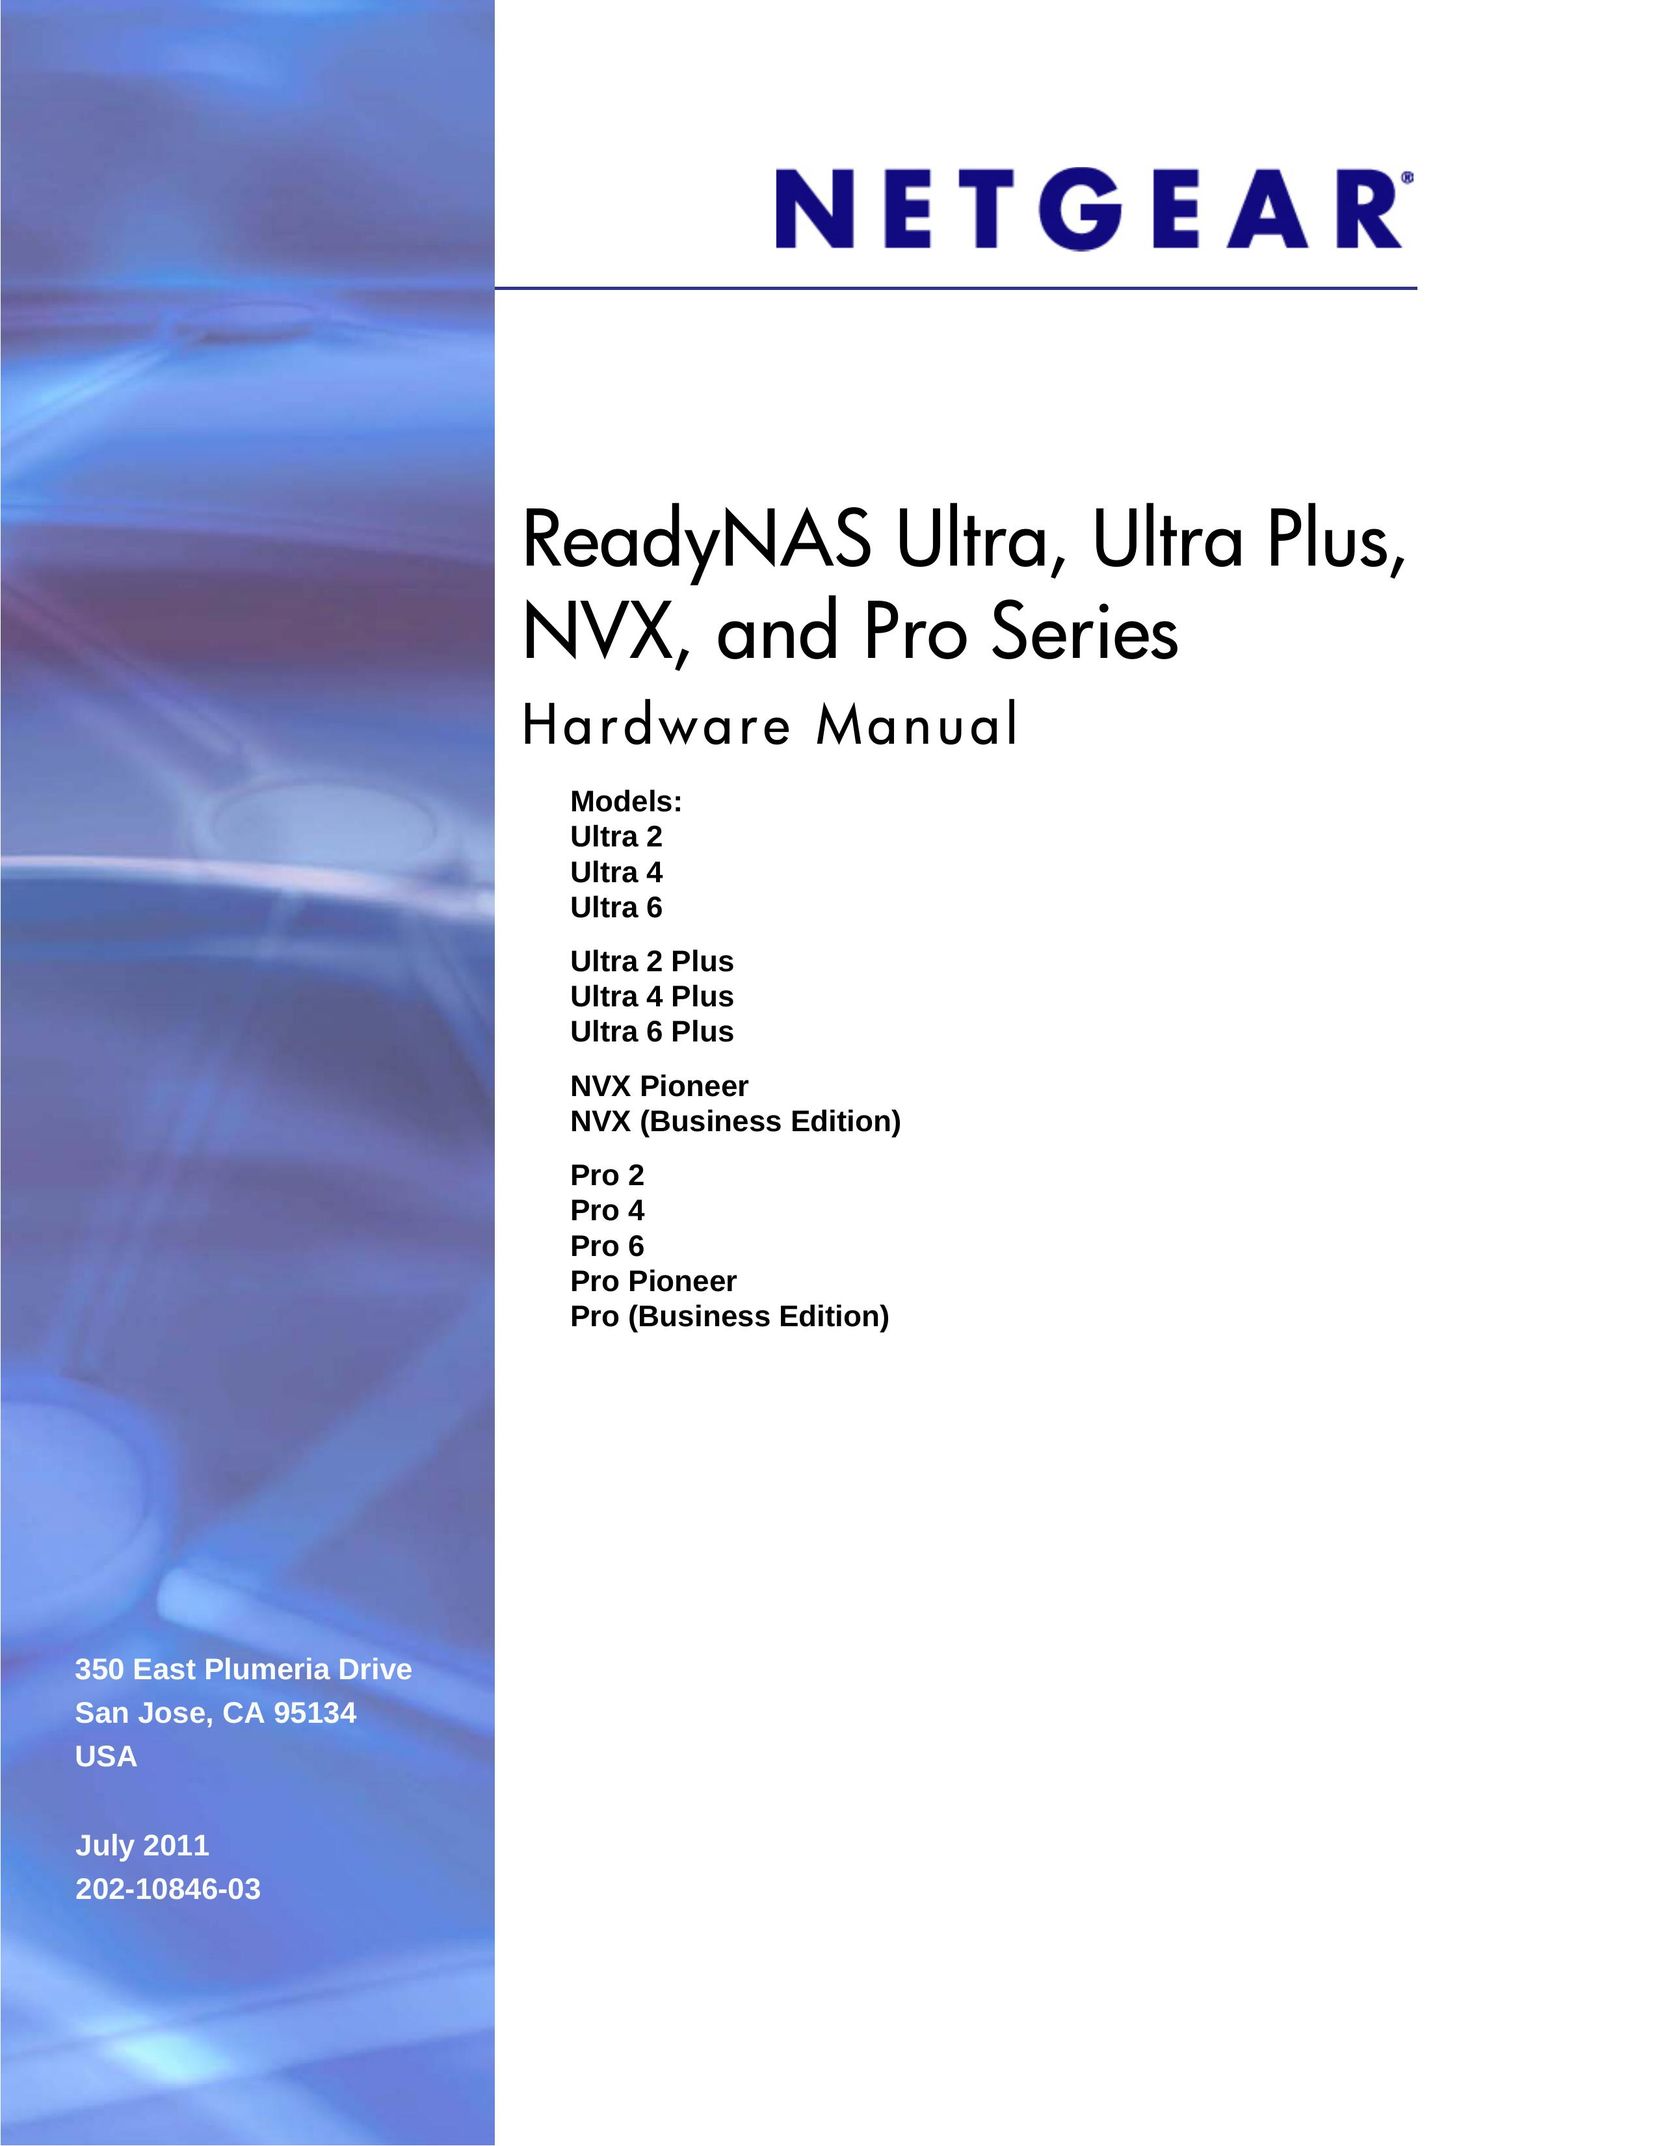 NETGEAR RNDP6310-100NAS Server User Manual